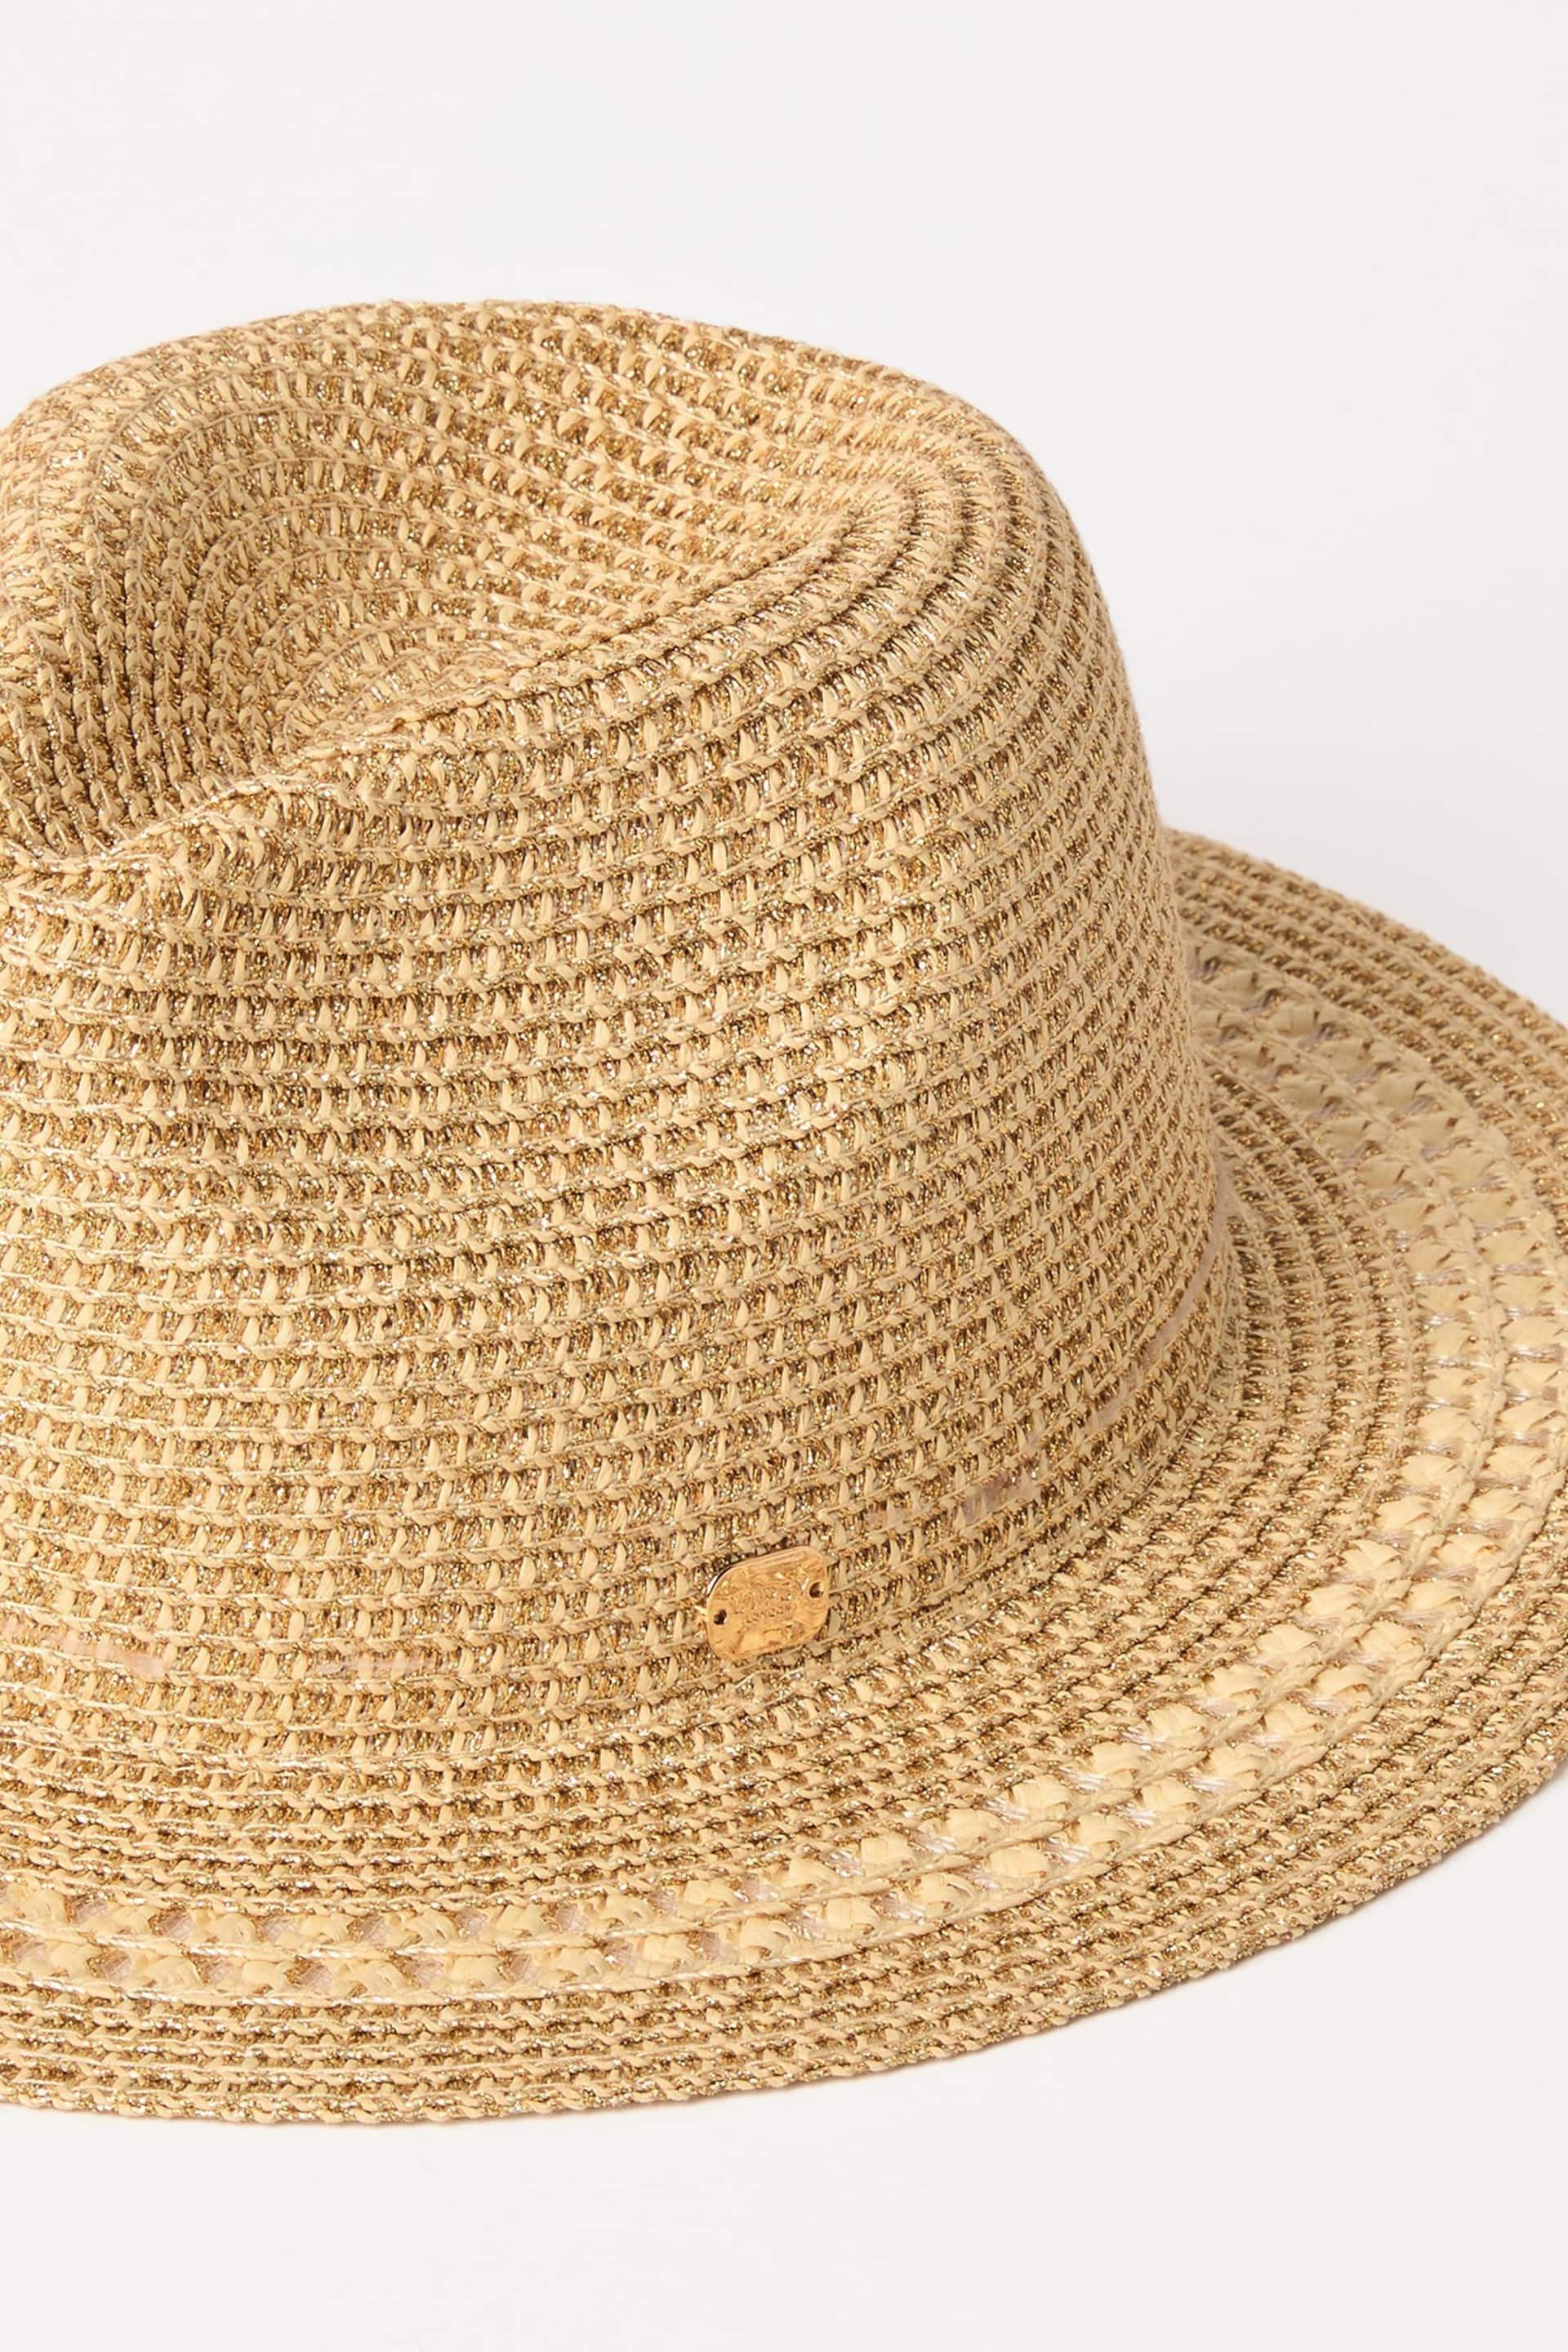 Lipsy Gold Straw Fedora Hat - Image 5 of 6